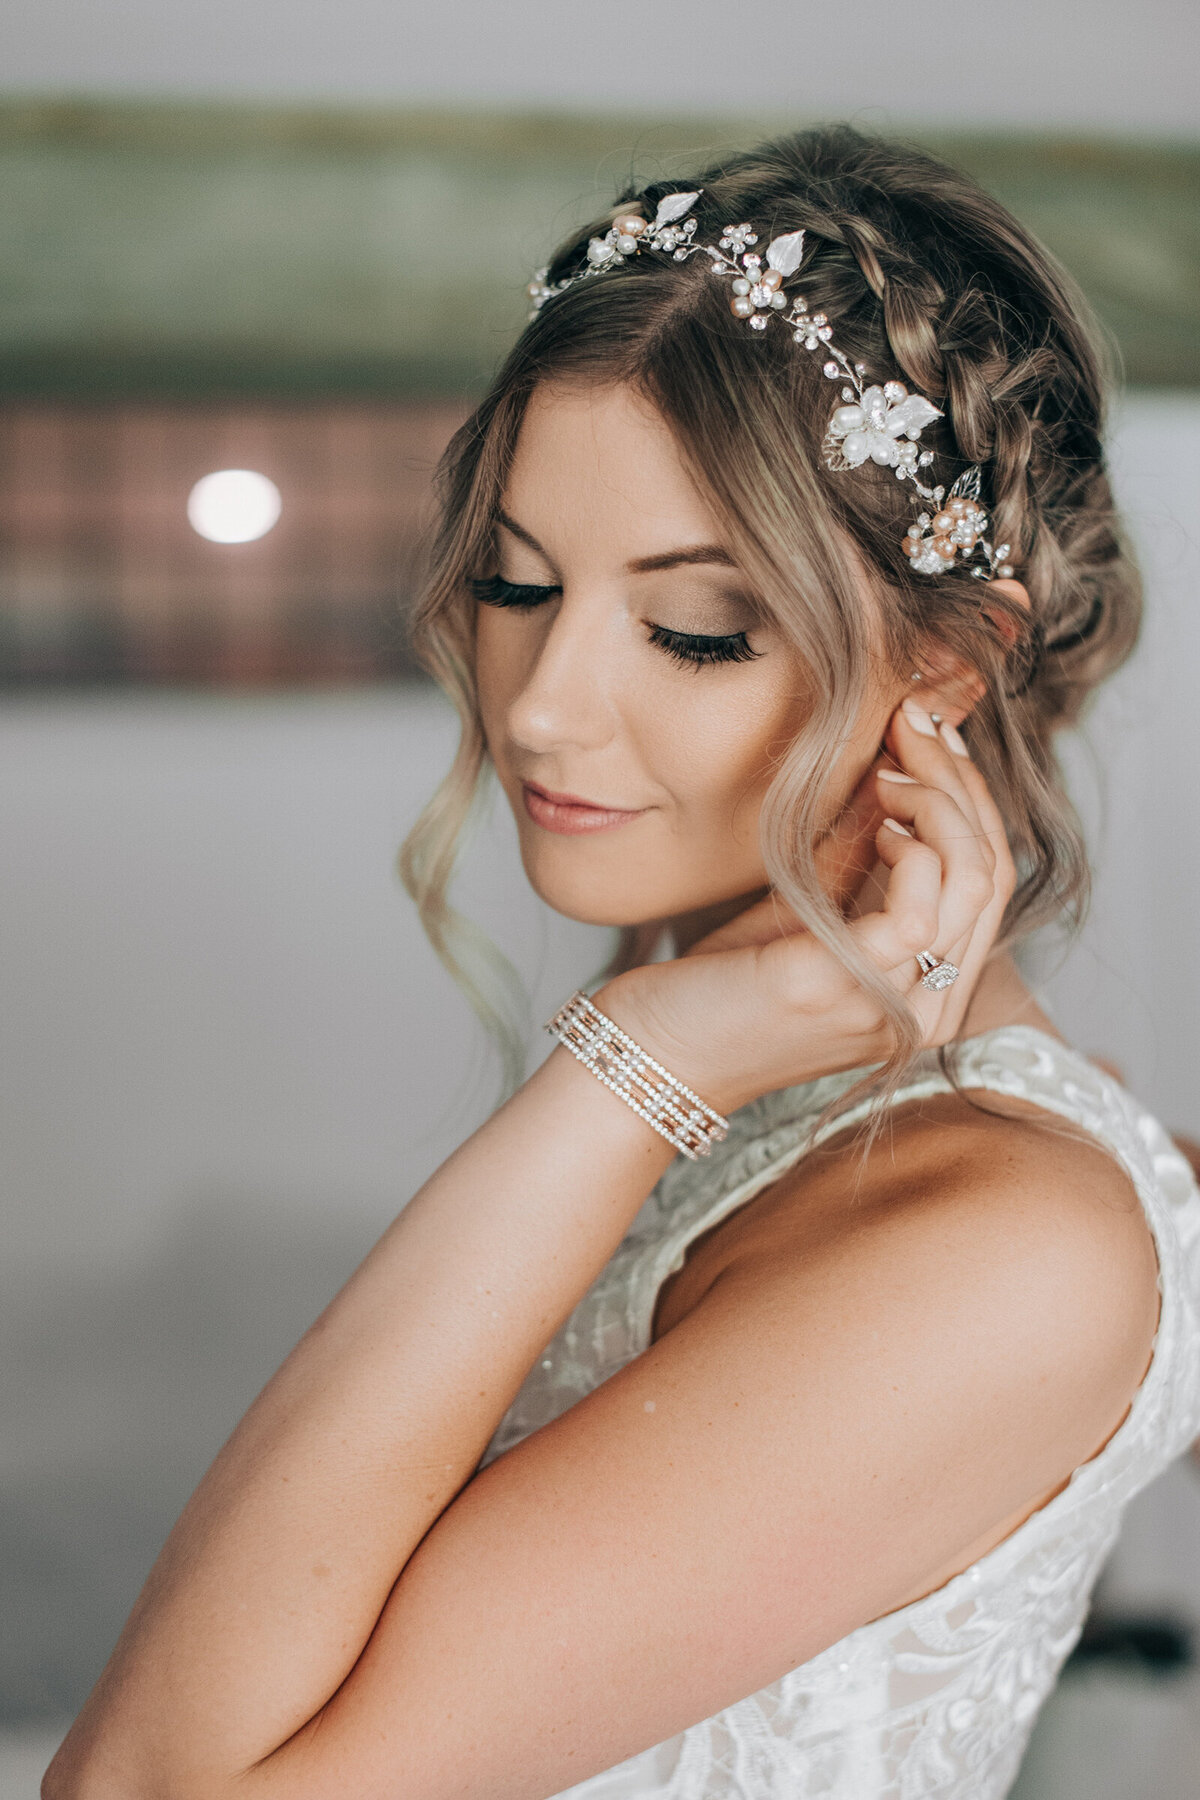 A beautiful bride putting on her diamond earrings